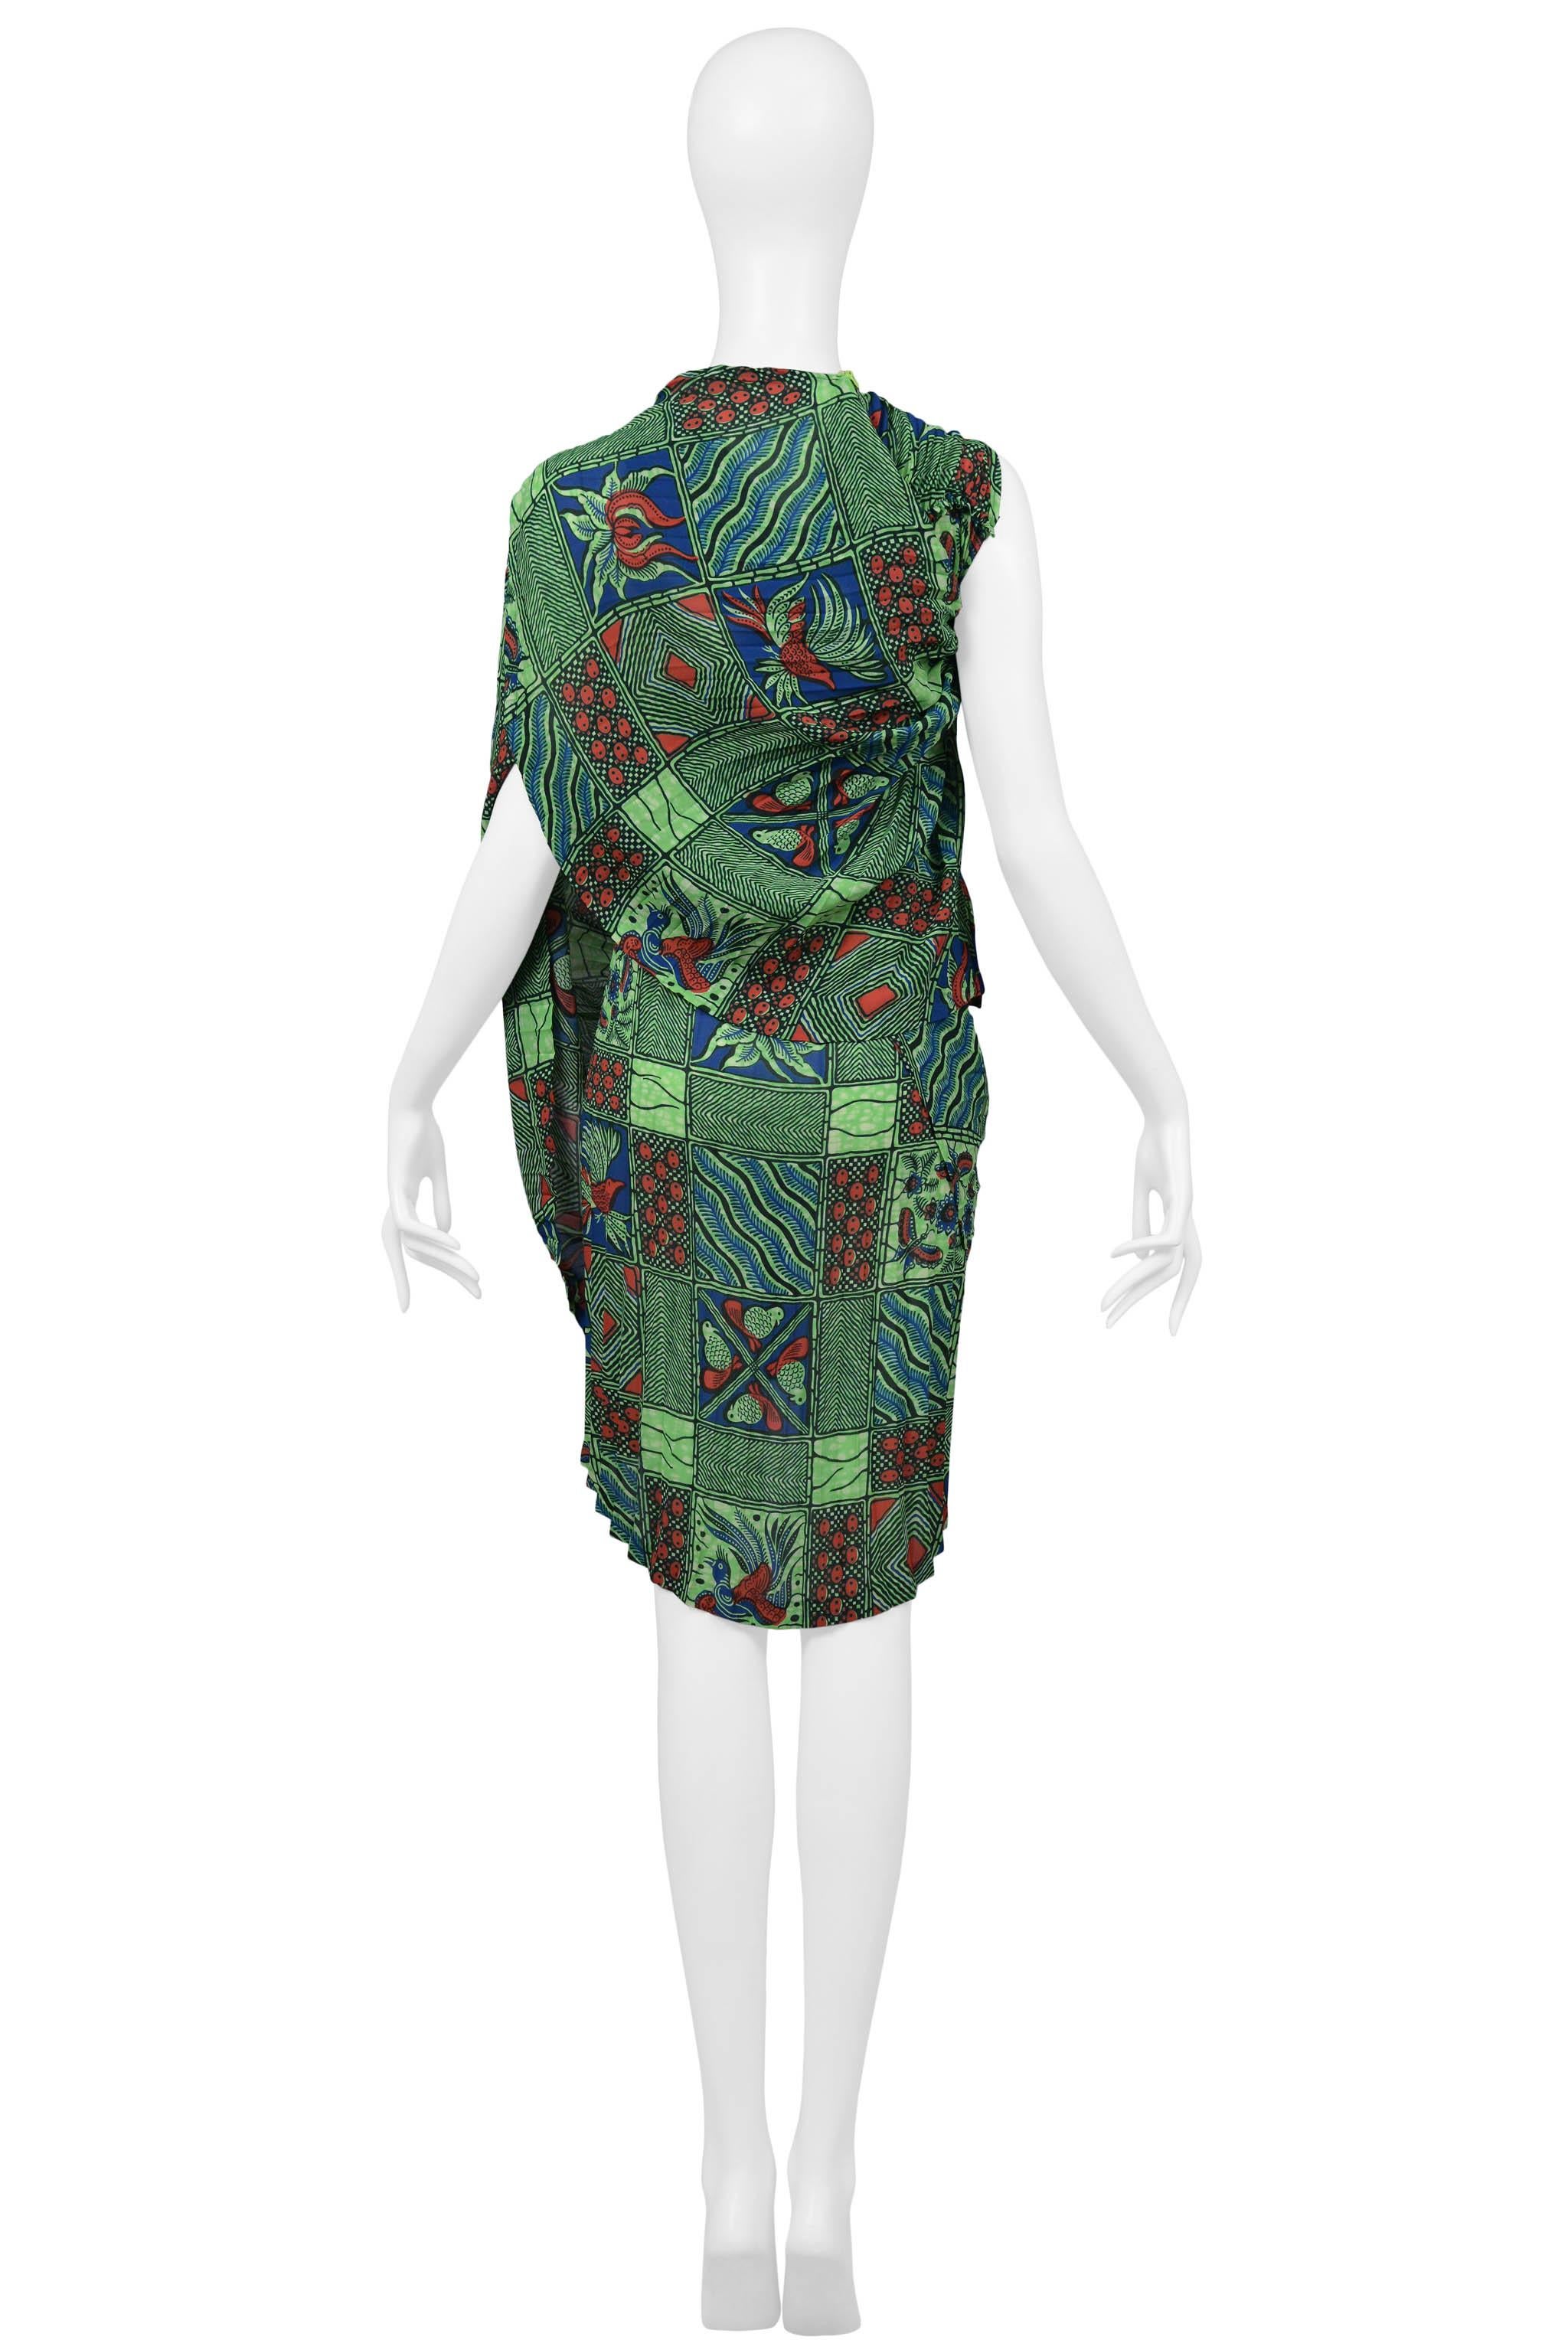 Junya Watanabe Green African Print Dress 2009 1